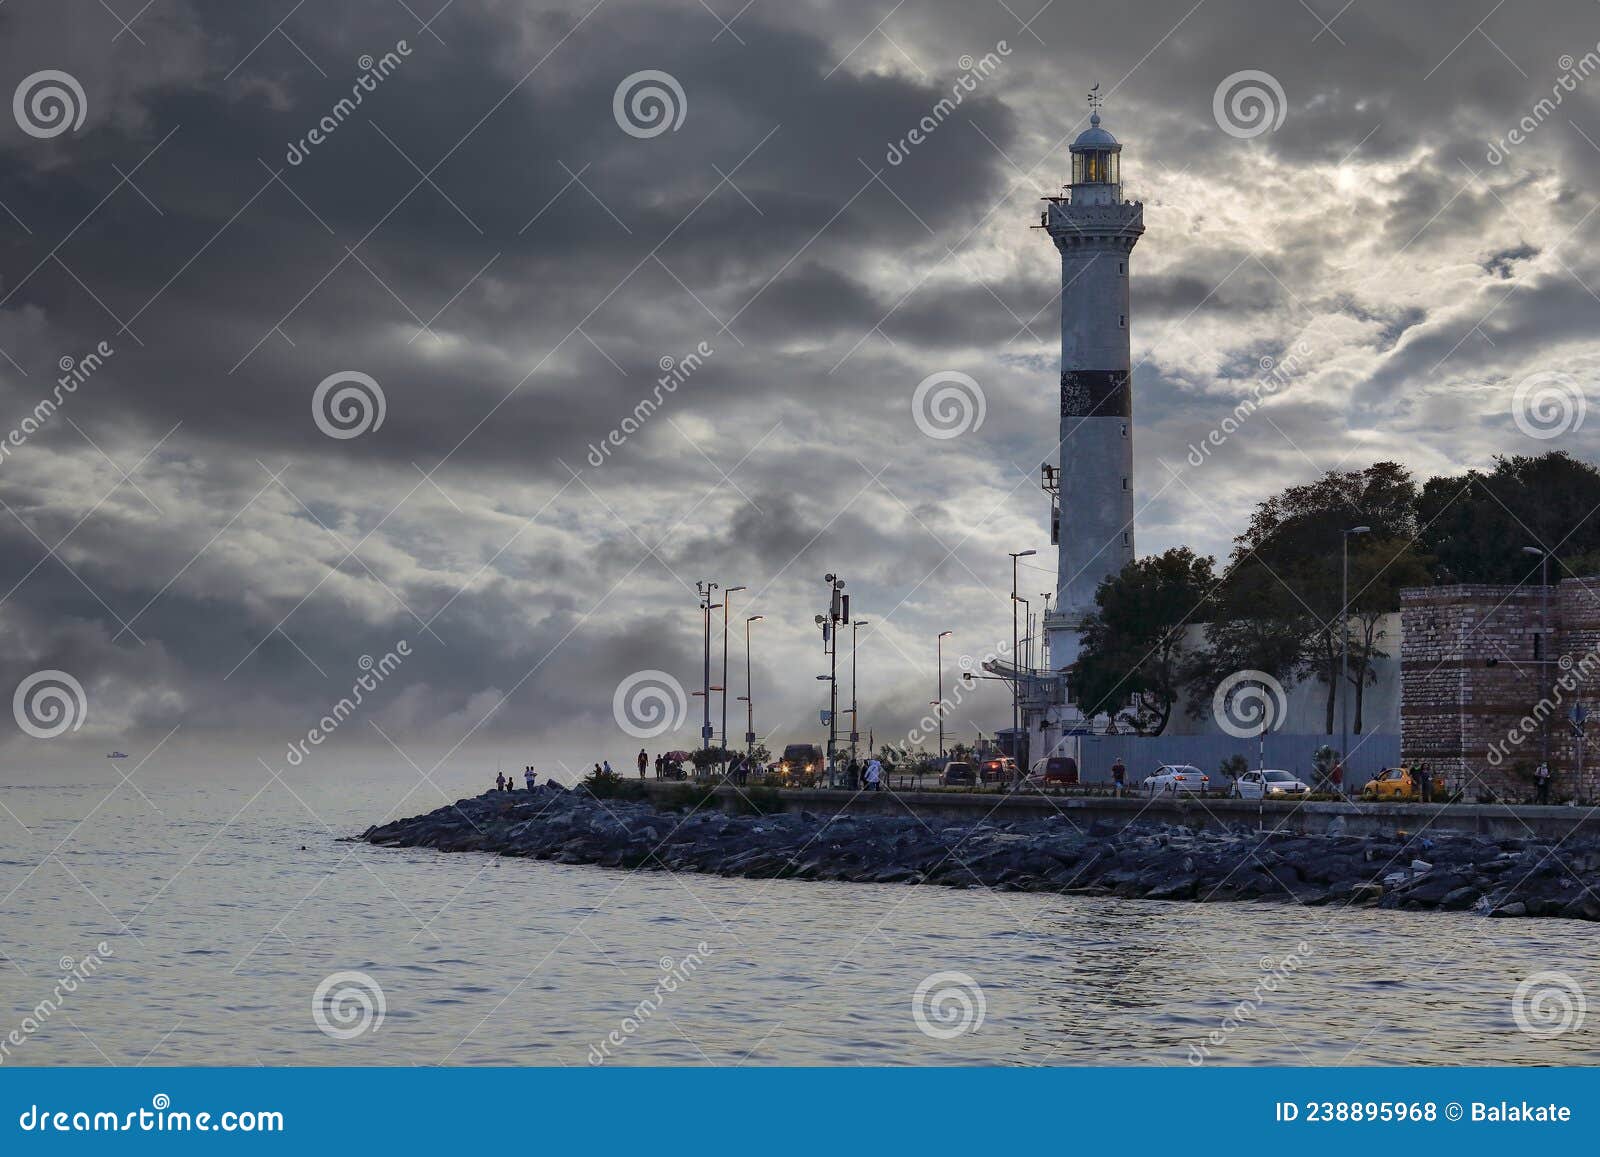 ahirkapi lighthouse. fatih district, city of istanbul, turkey